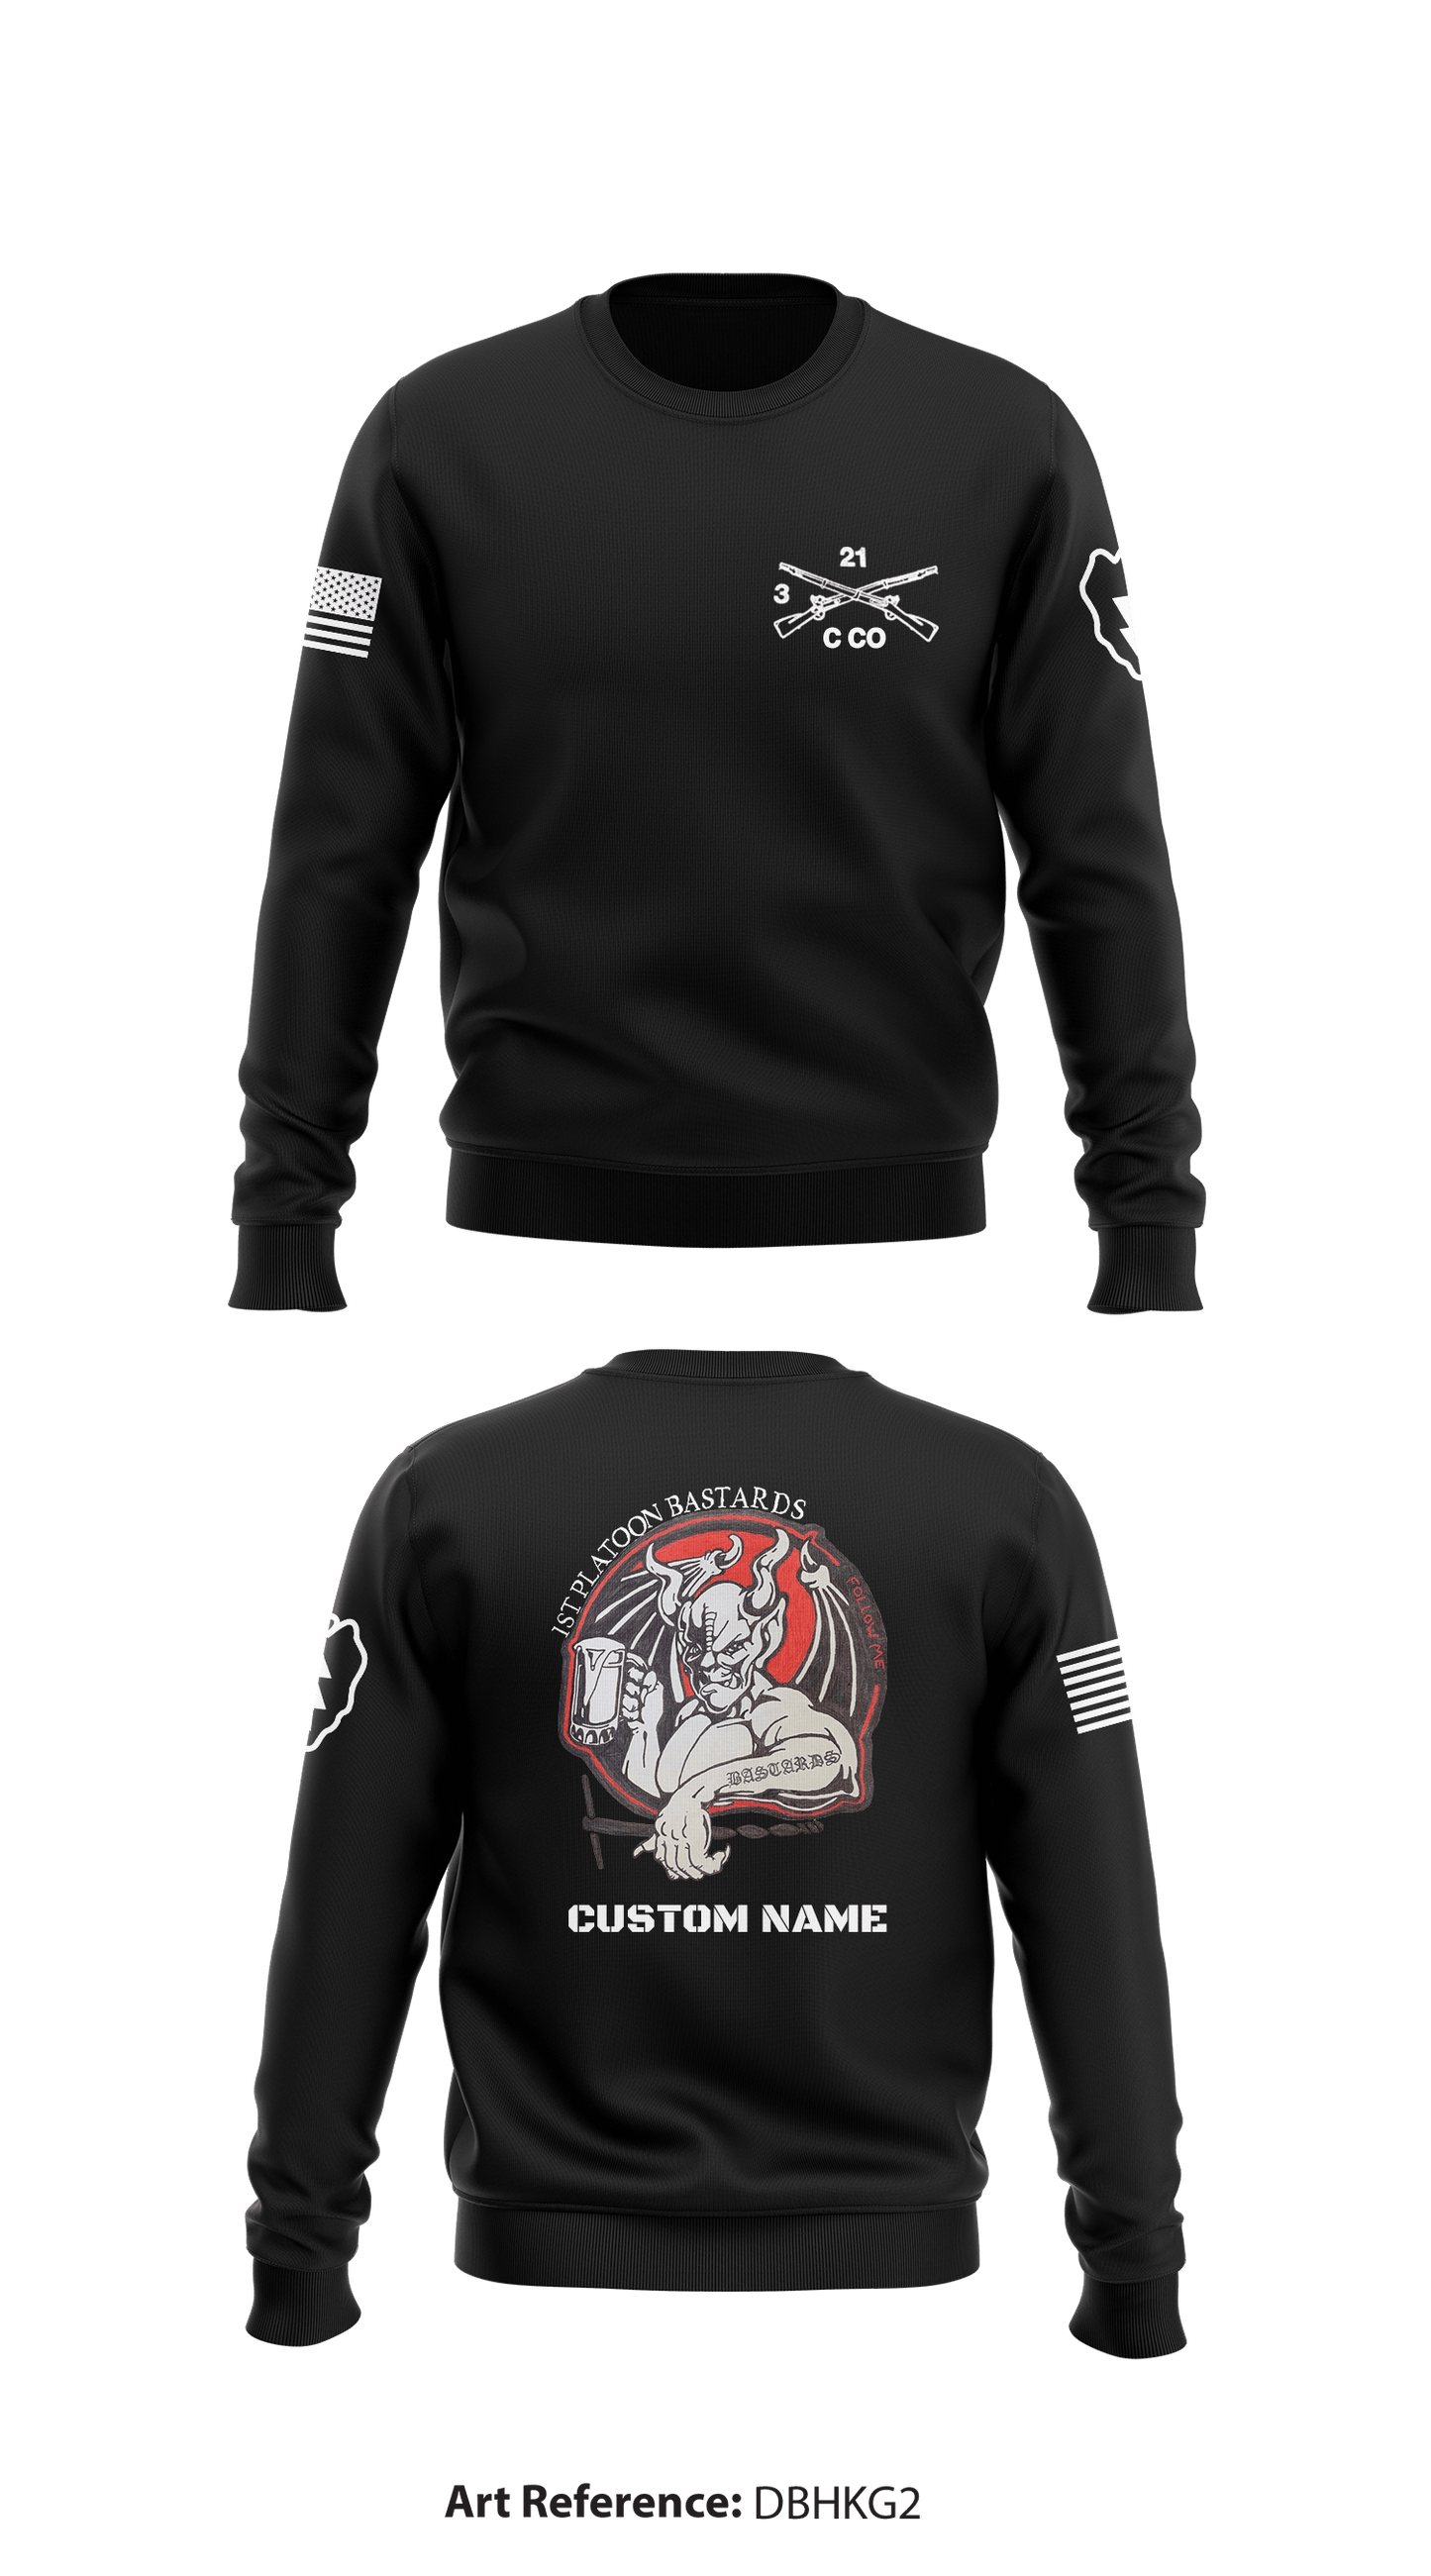 Charlie Company, 3-21 Infantry Store 1 Core Men's Crewneck Performance Sweatshirt - DBHKg2